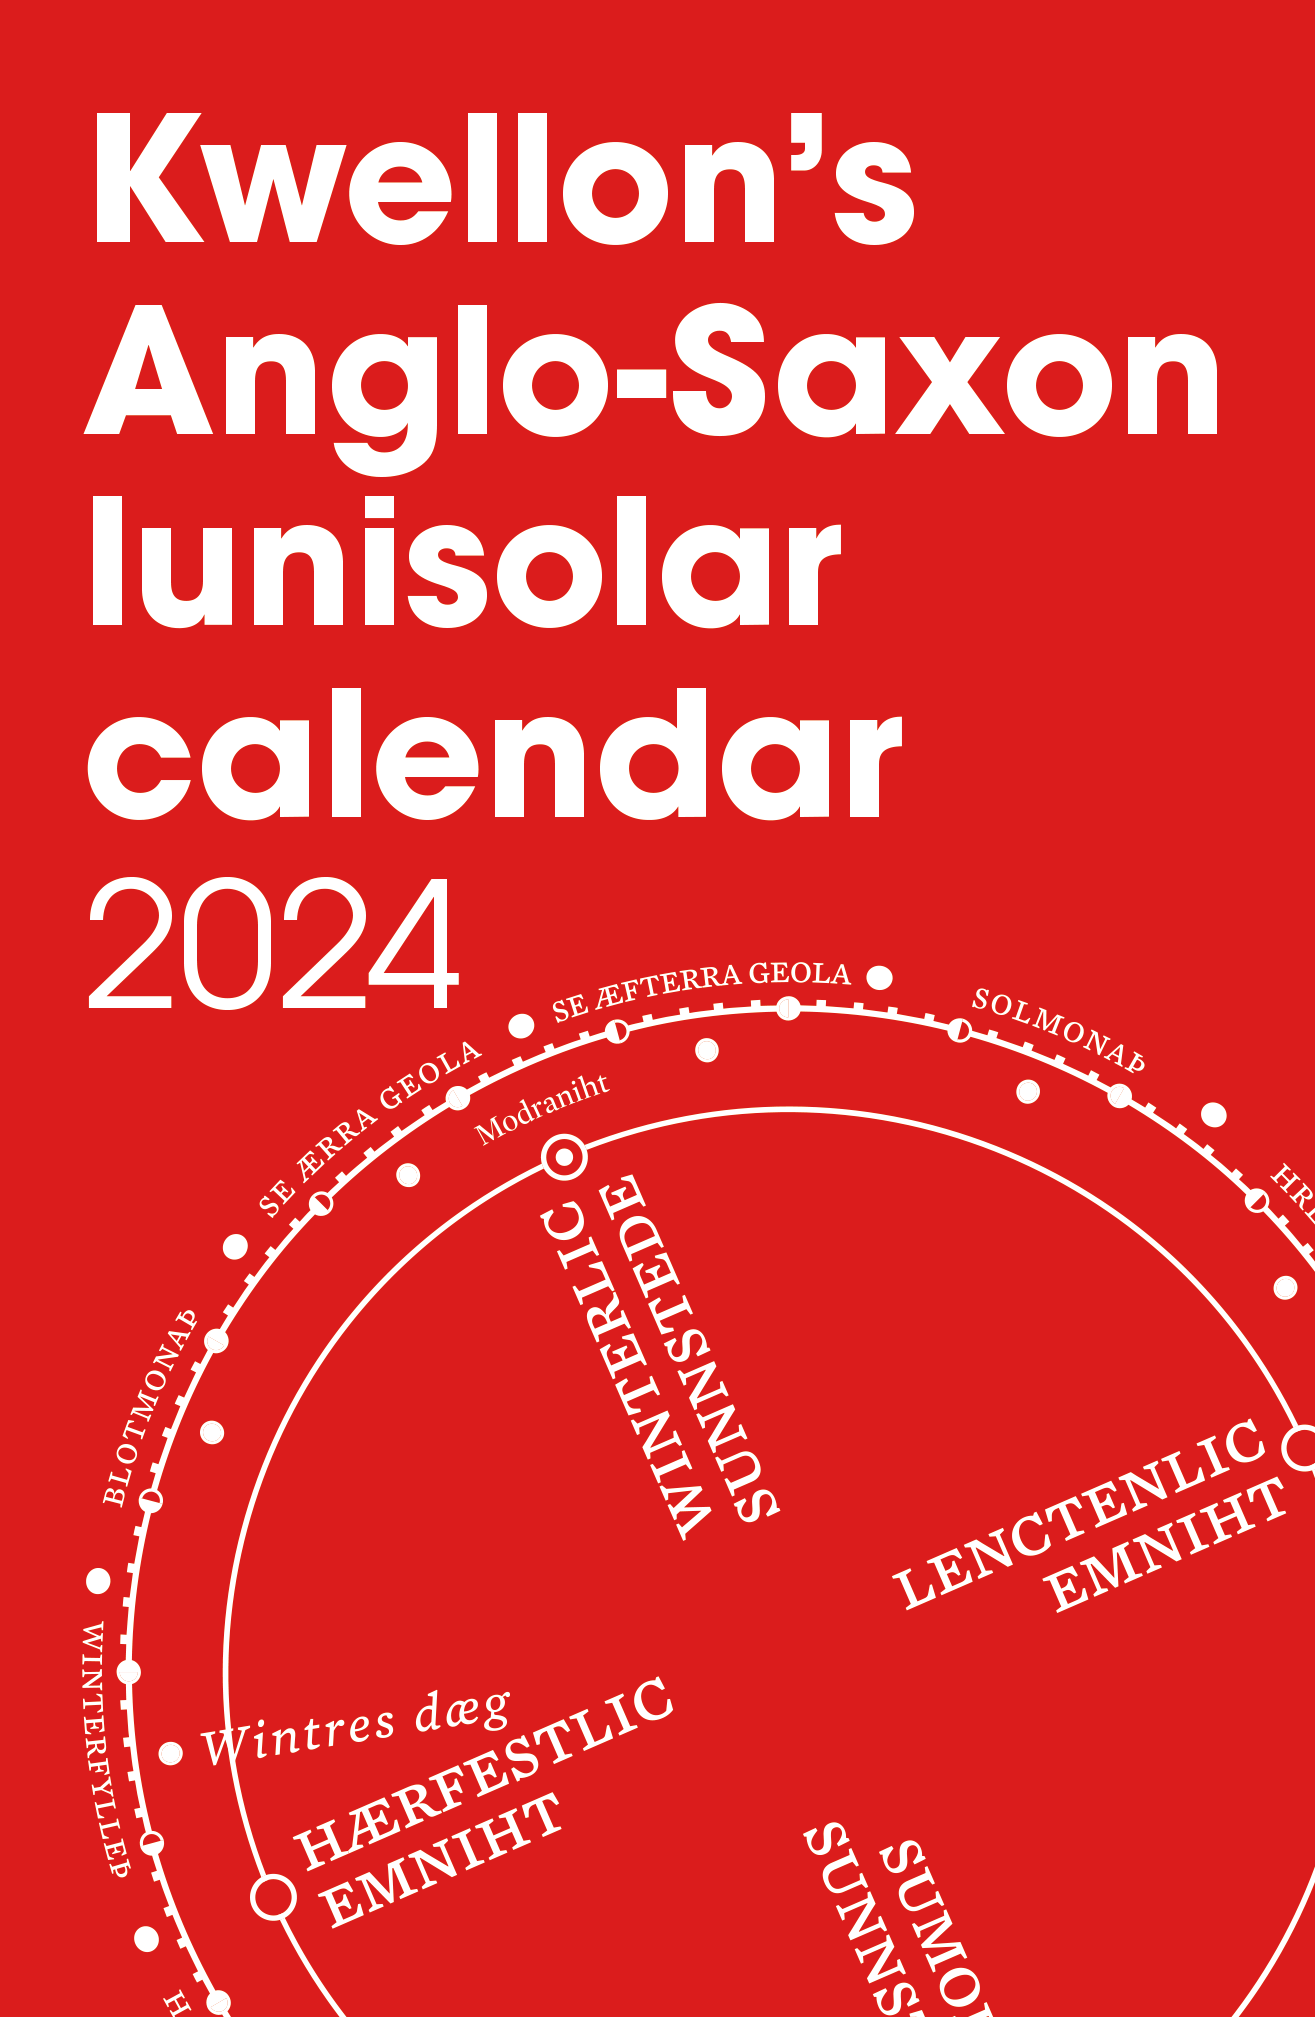 Kwellon’s Anglo-Saxon lunisolar calendar 2024